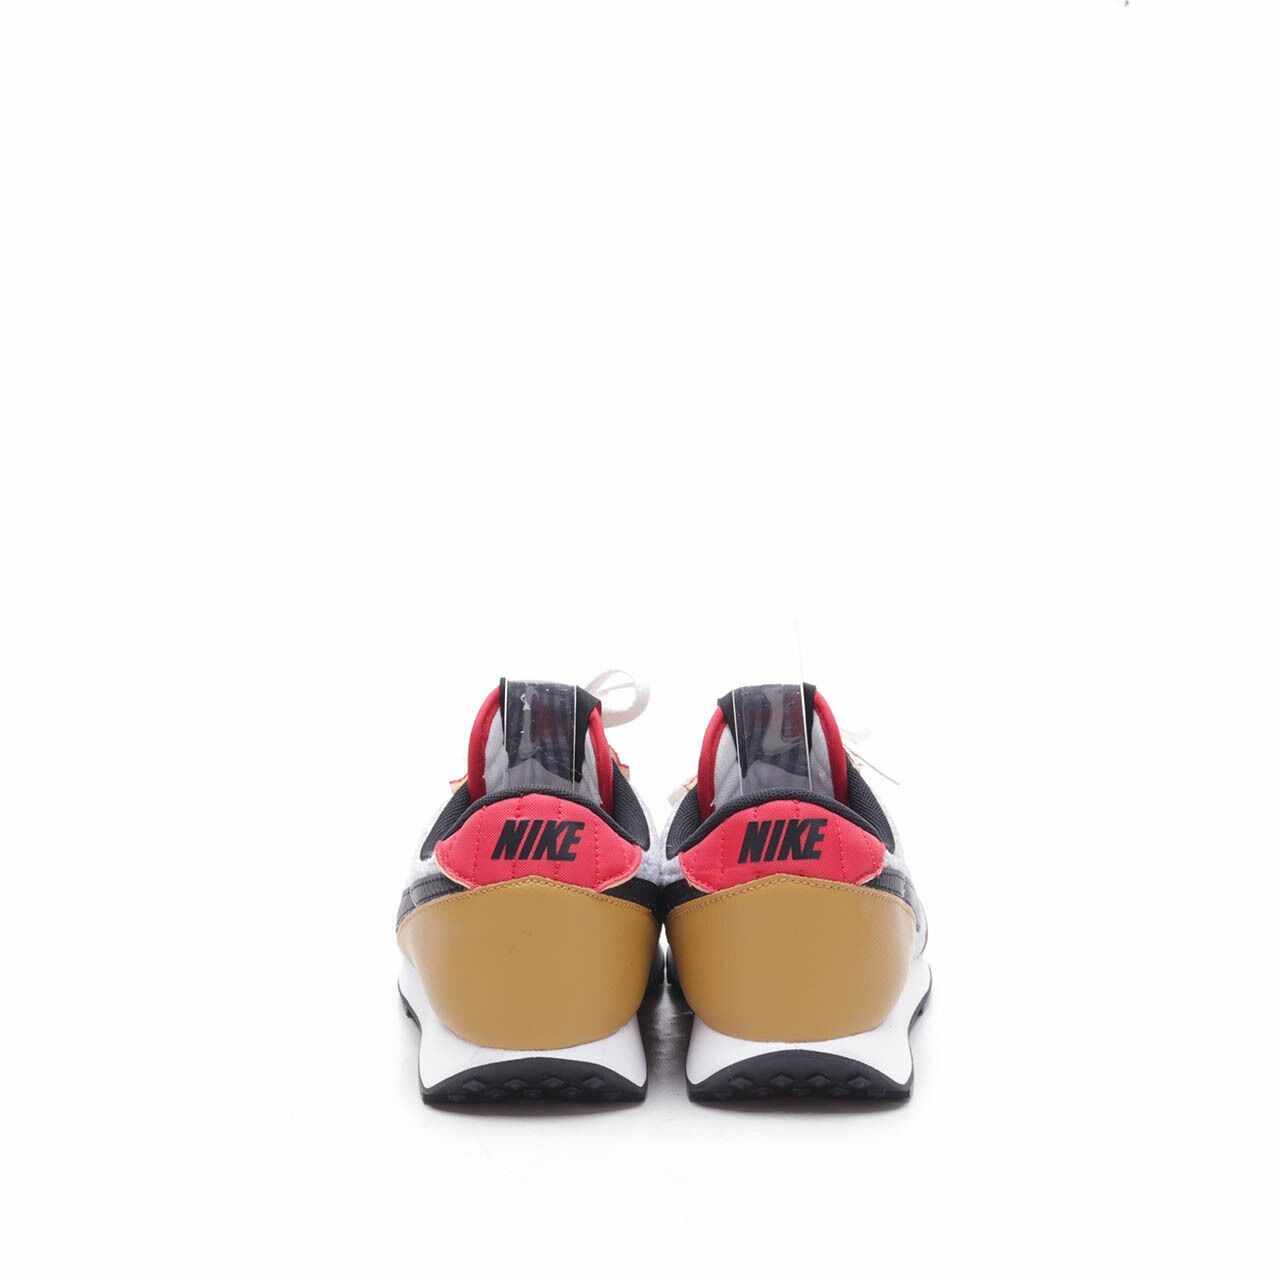 Nike Daybreak QS Gold Suede/Black/University Red Women's Sneakers